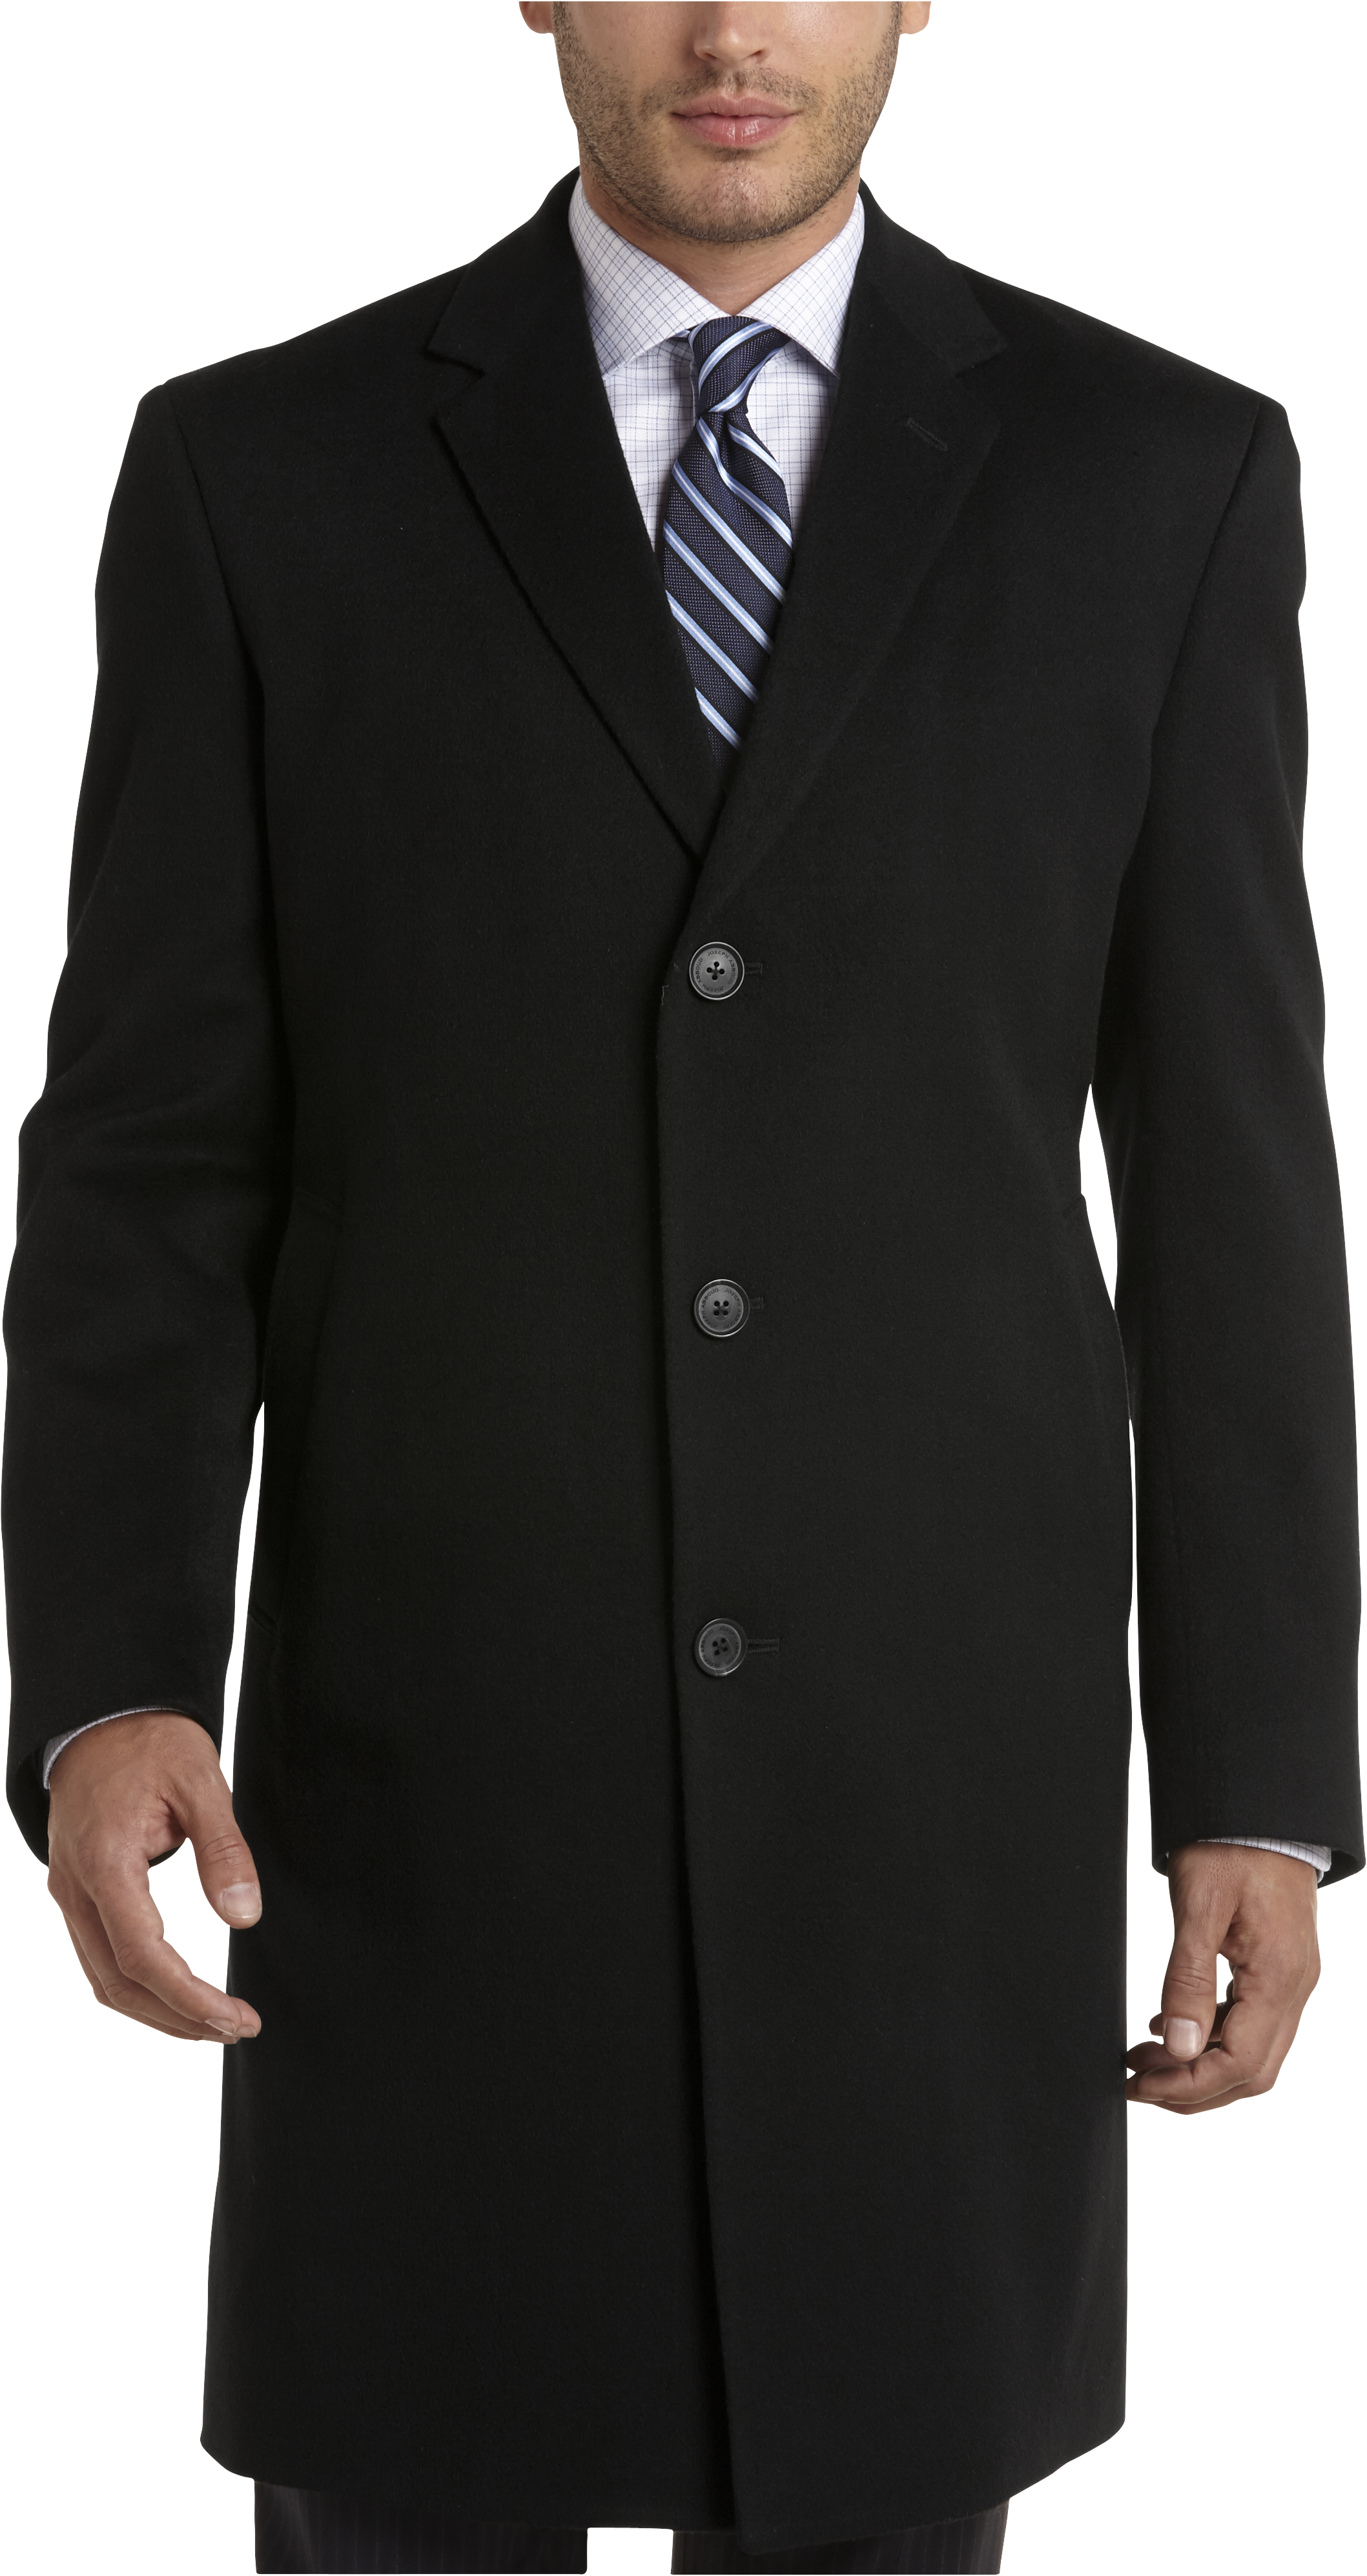 Joseph Abboud White Label 100% Cashmere Modern Fit Topcoat, Black - Men ...